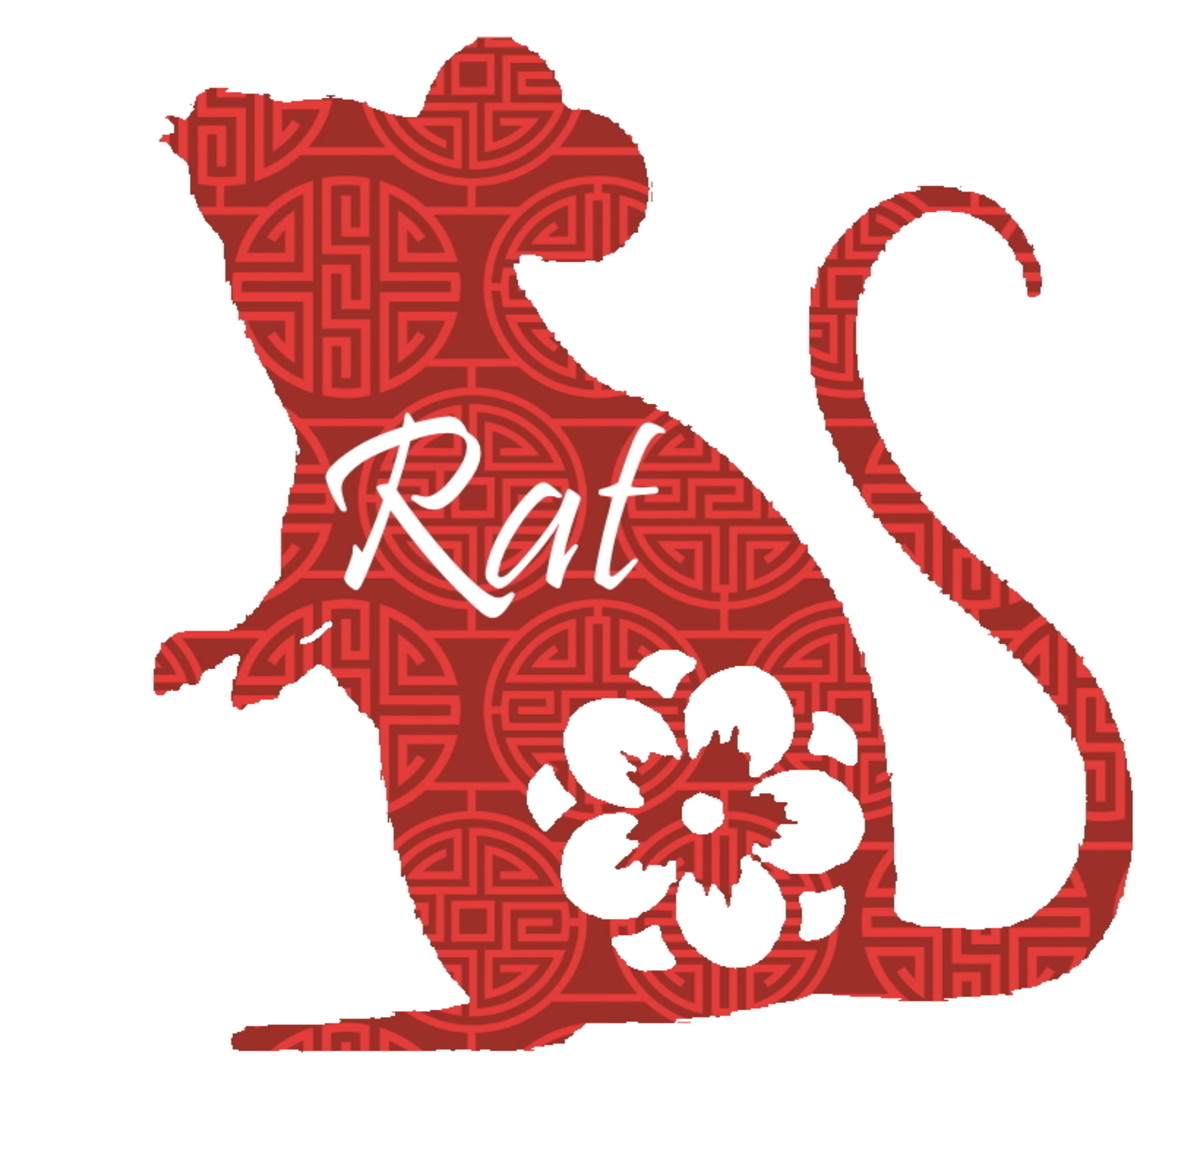 The rat 